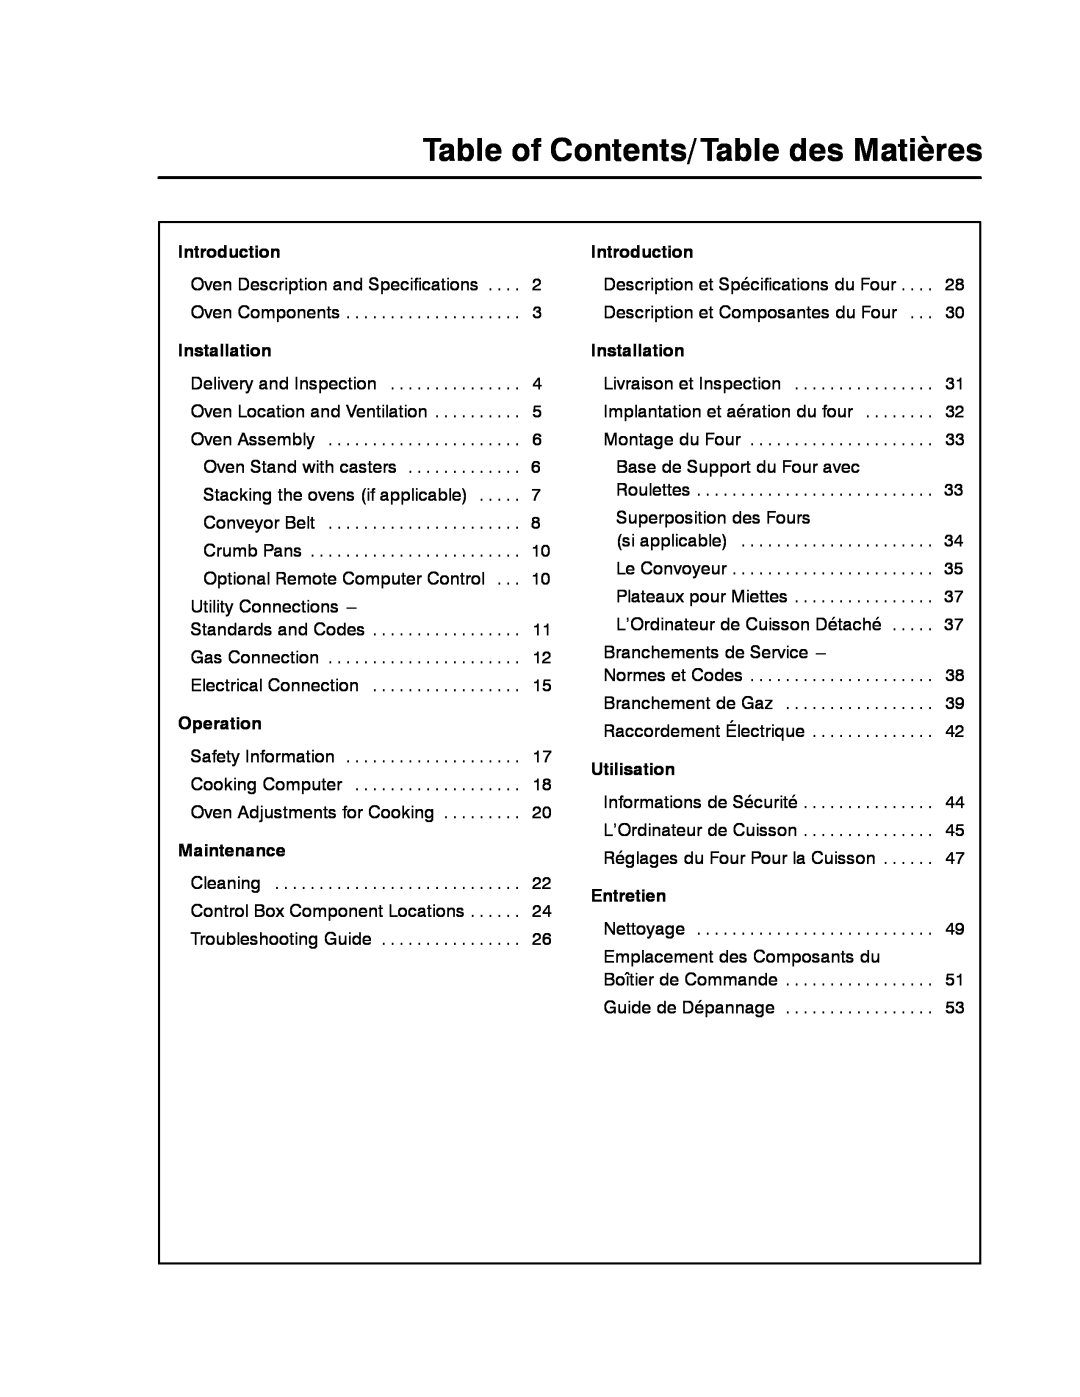 Blodgett MT1828E Table of Contents/Table des Matières, Introduction, Installation, Operation, Maintenance, Utilisation 